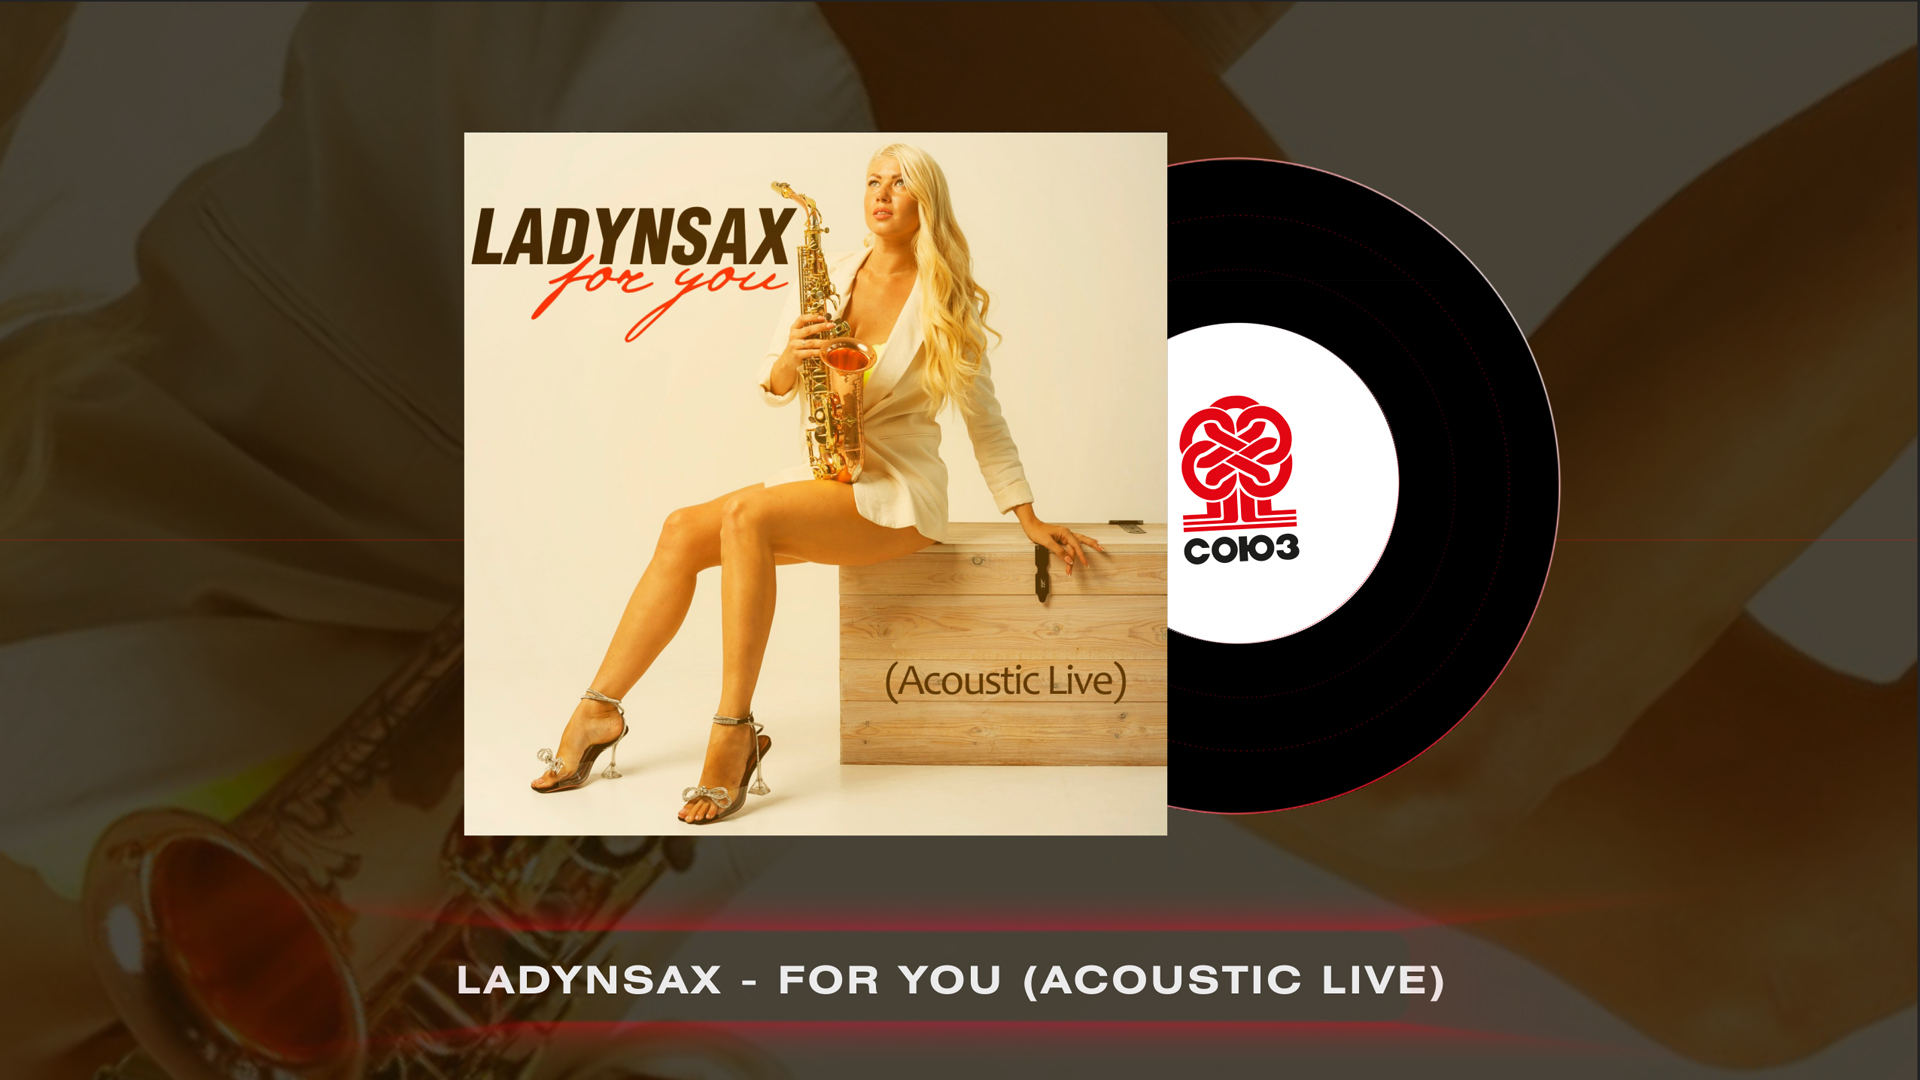 Soul ladynsax. For you ladynsax. Ladynsax for you (Acoustic Live). Ladynsax-Ameno (Cover). Sadeness ladynsax.